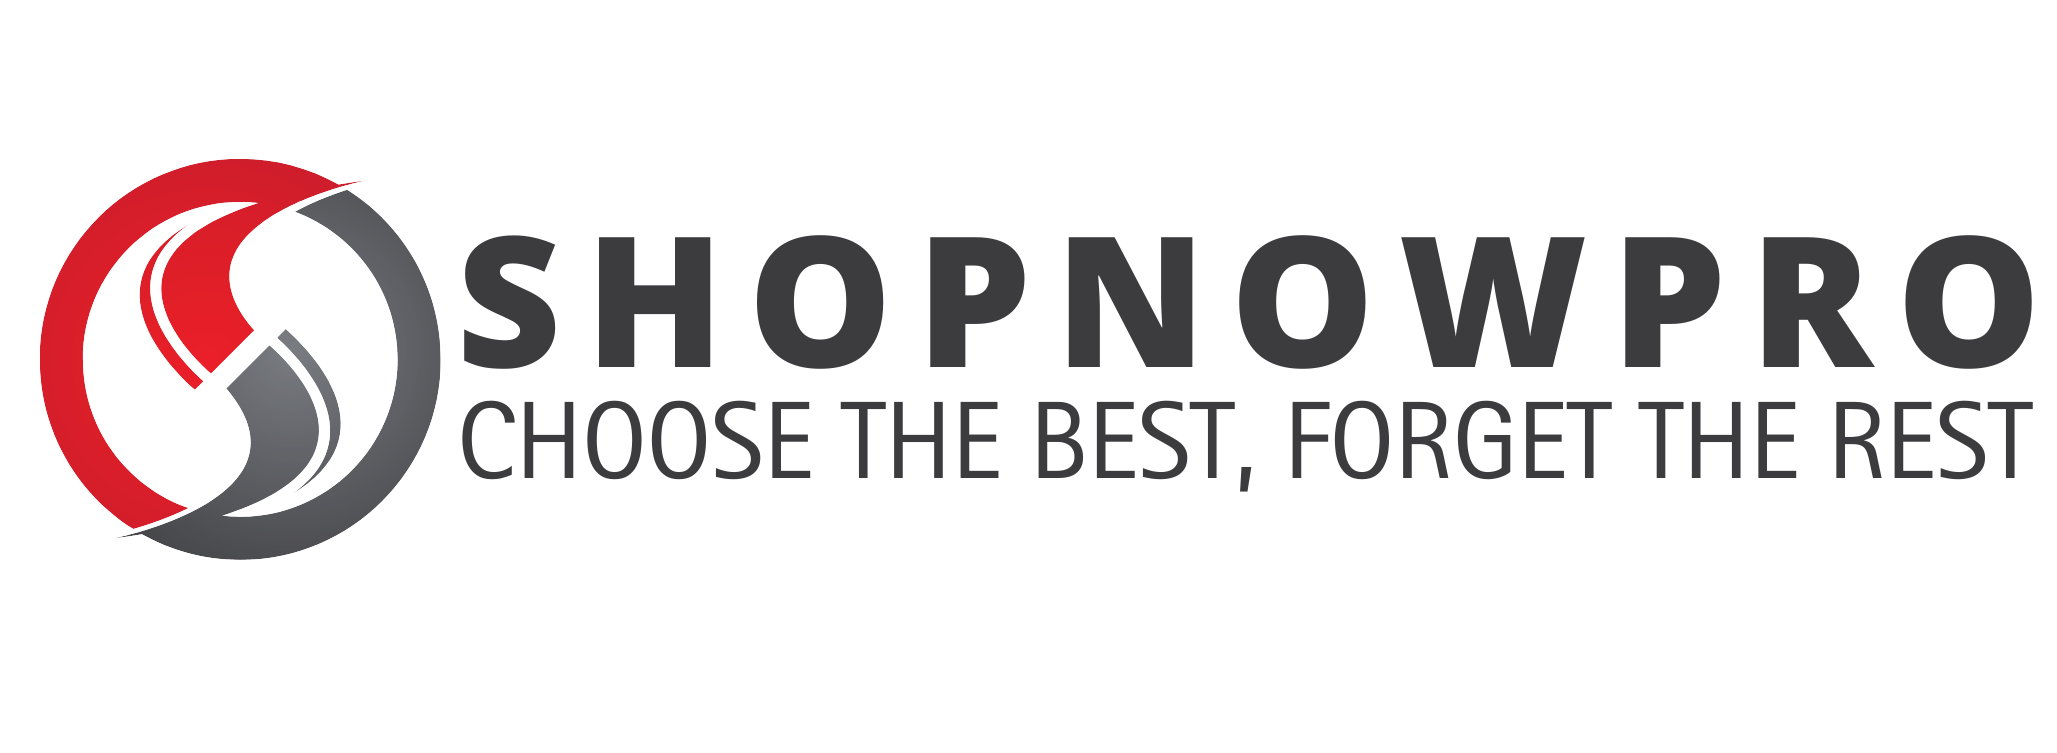 Shopnowpro